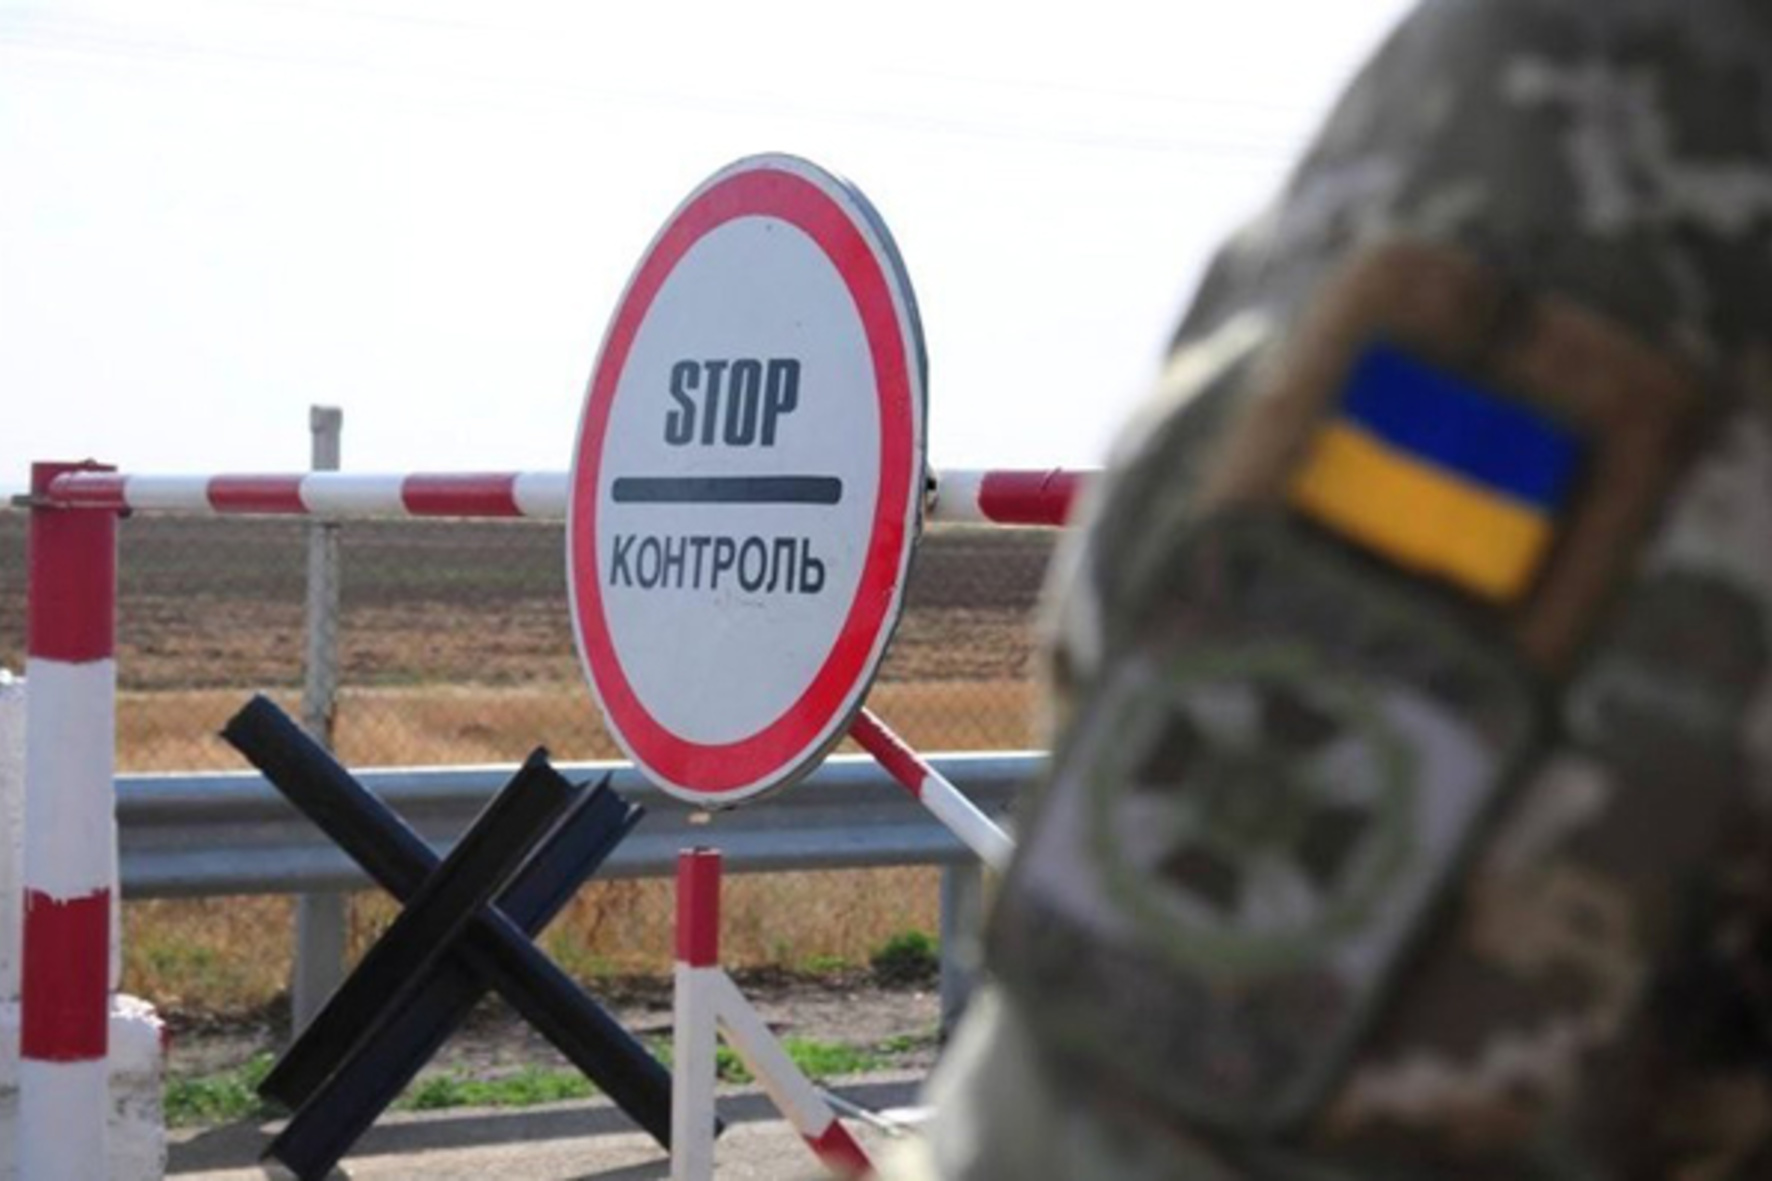 Romania: useful information for Ukrainian refugees